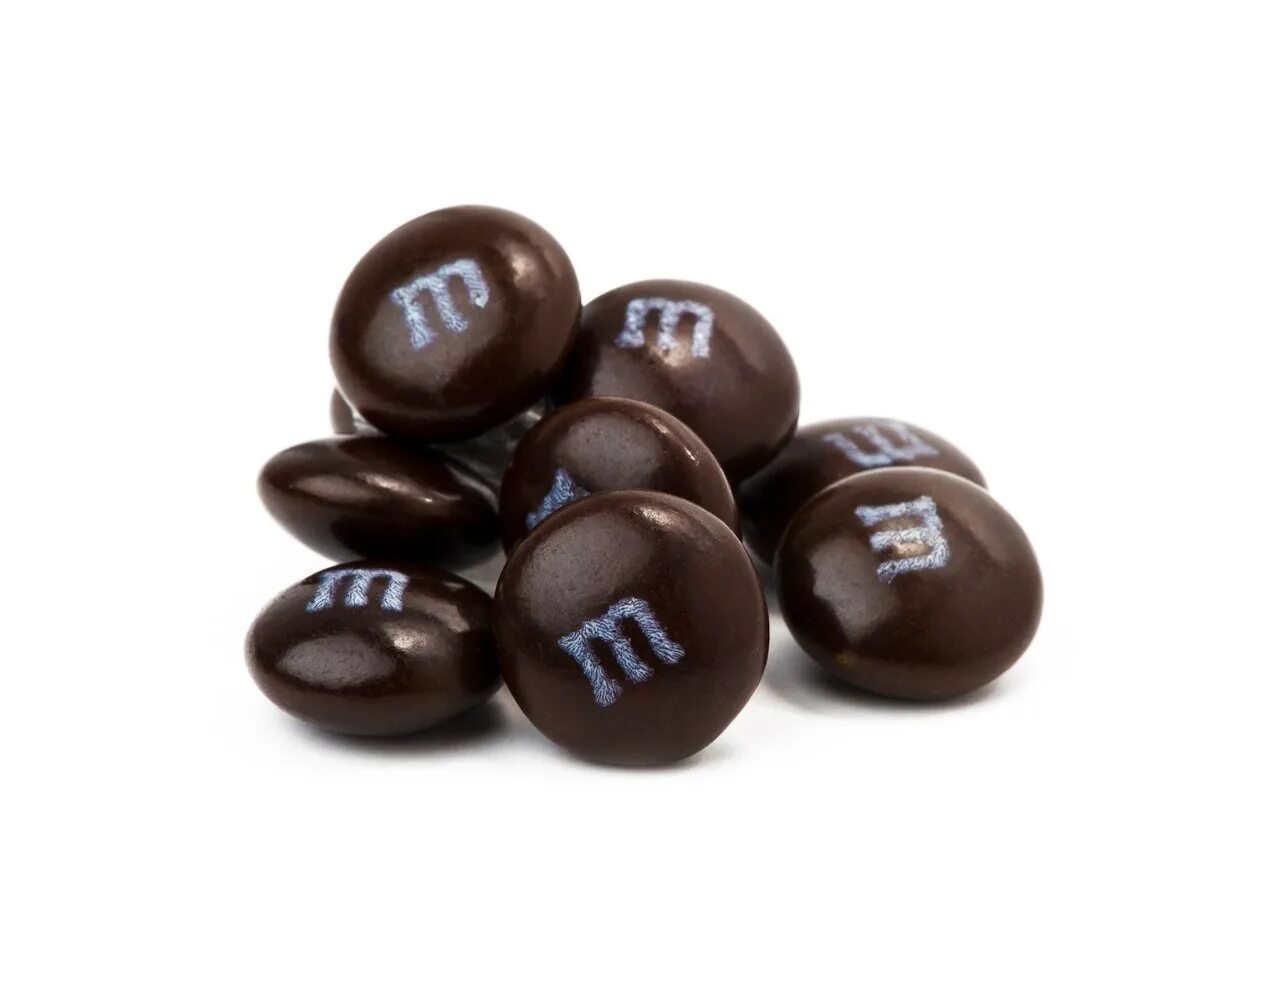 M MS коричневый. Коричневая m&m`s. Mms коричневый. М М конфеты. Null s brown